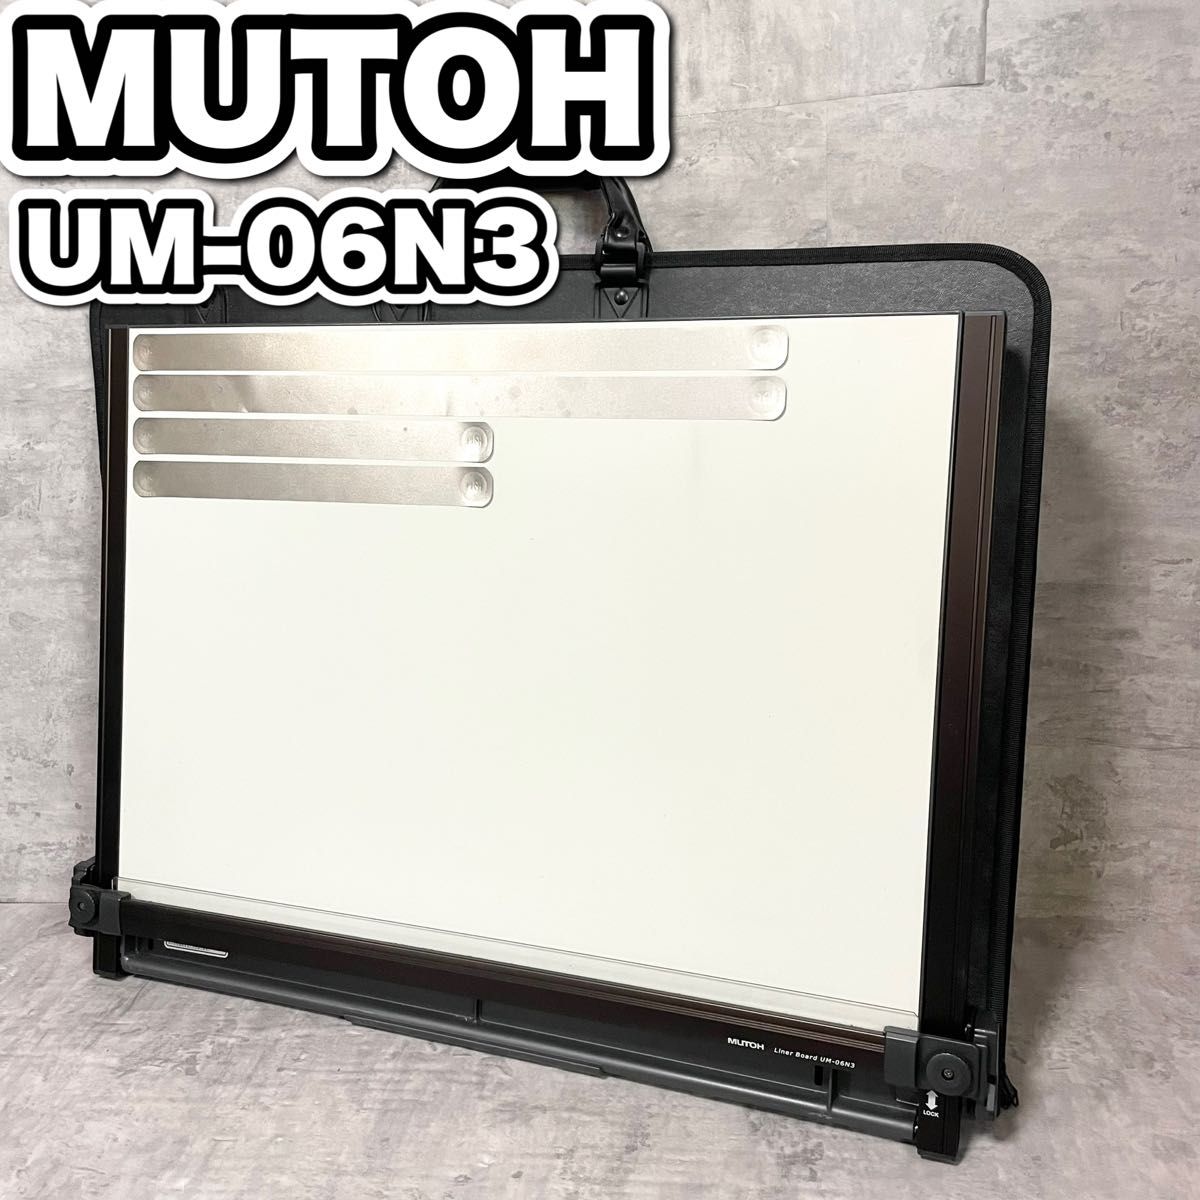 MUTOH ムトー 製図板 UM-06N3 ライナーボード 平行定規 建築士｜PayPay